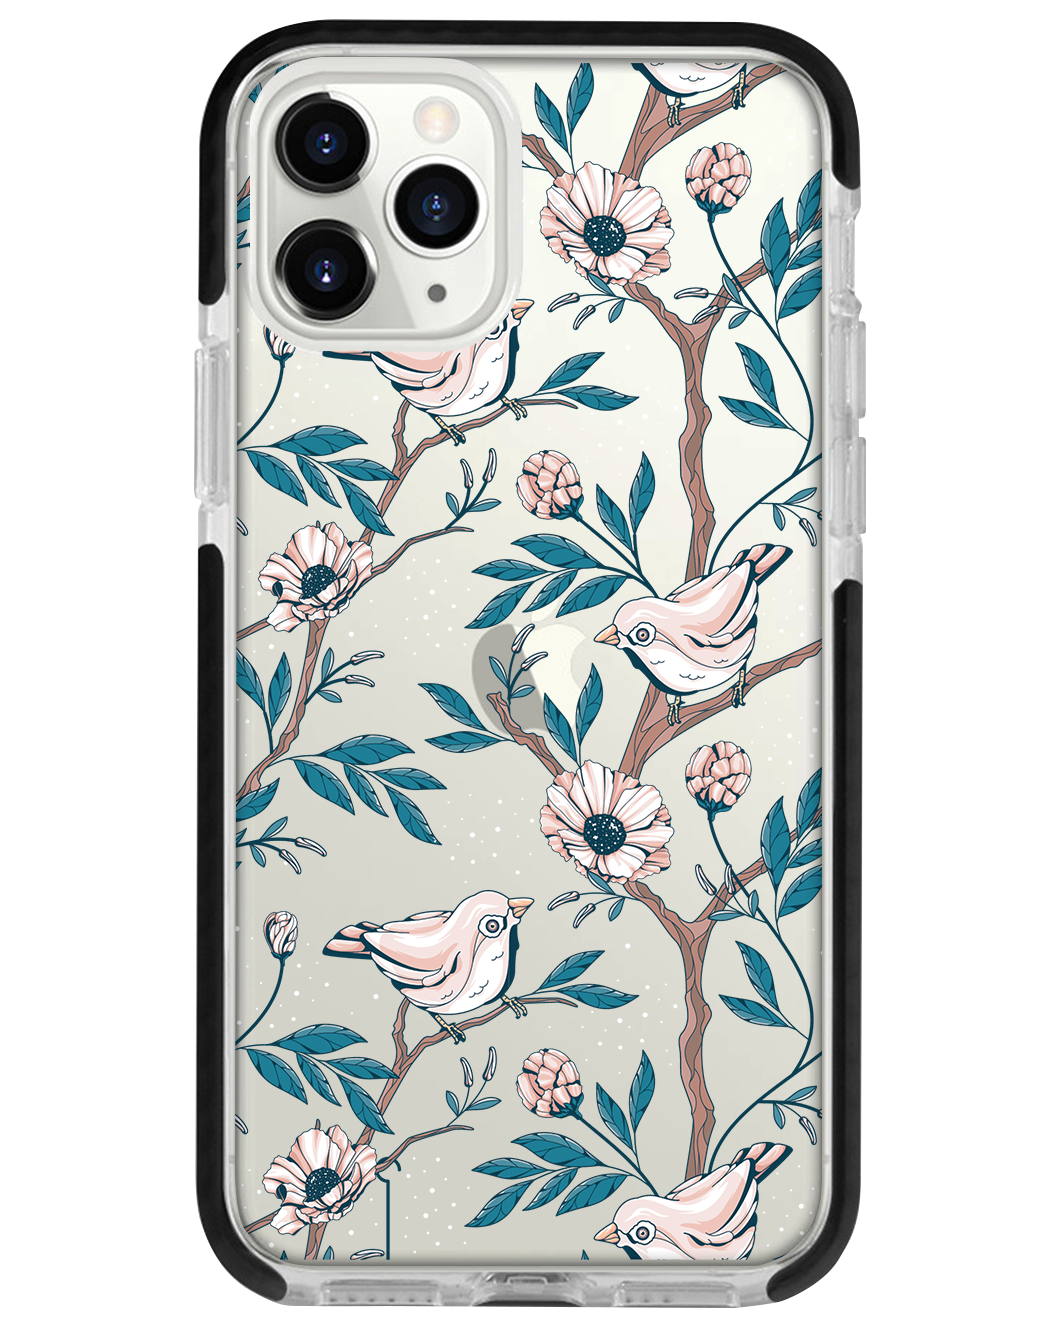 iPhone - Lovebird 3.0